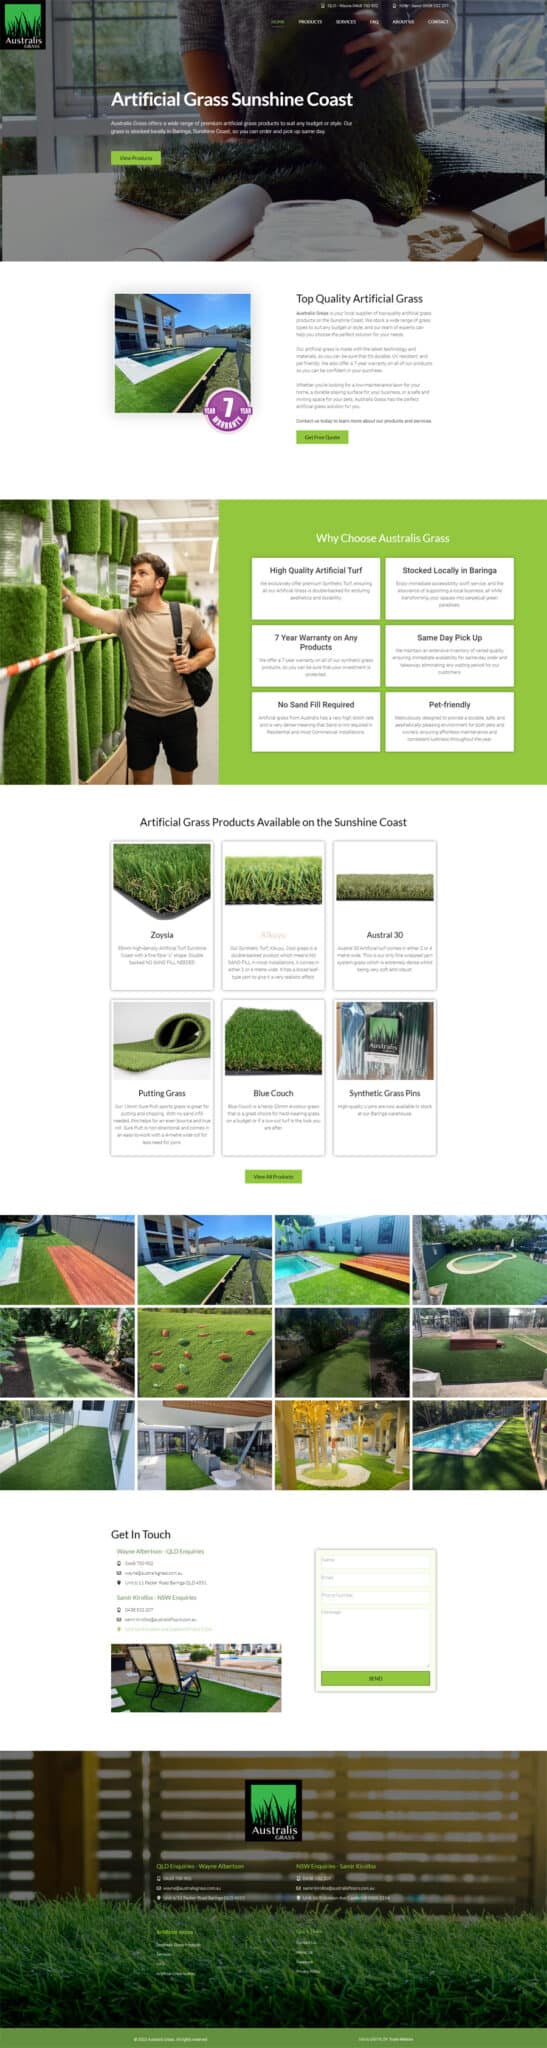 Artificial Grass Supplier Sunshine Coast Website Redesign DIGITALON